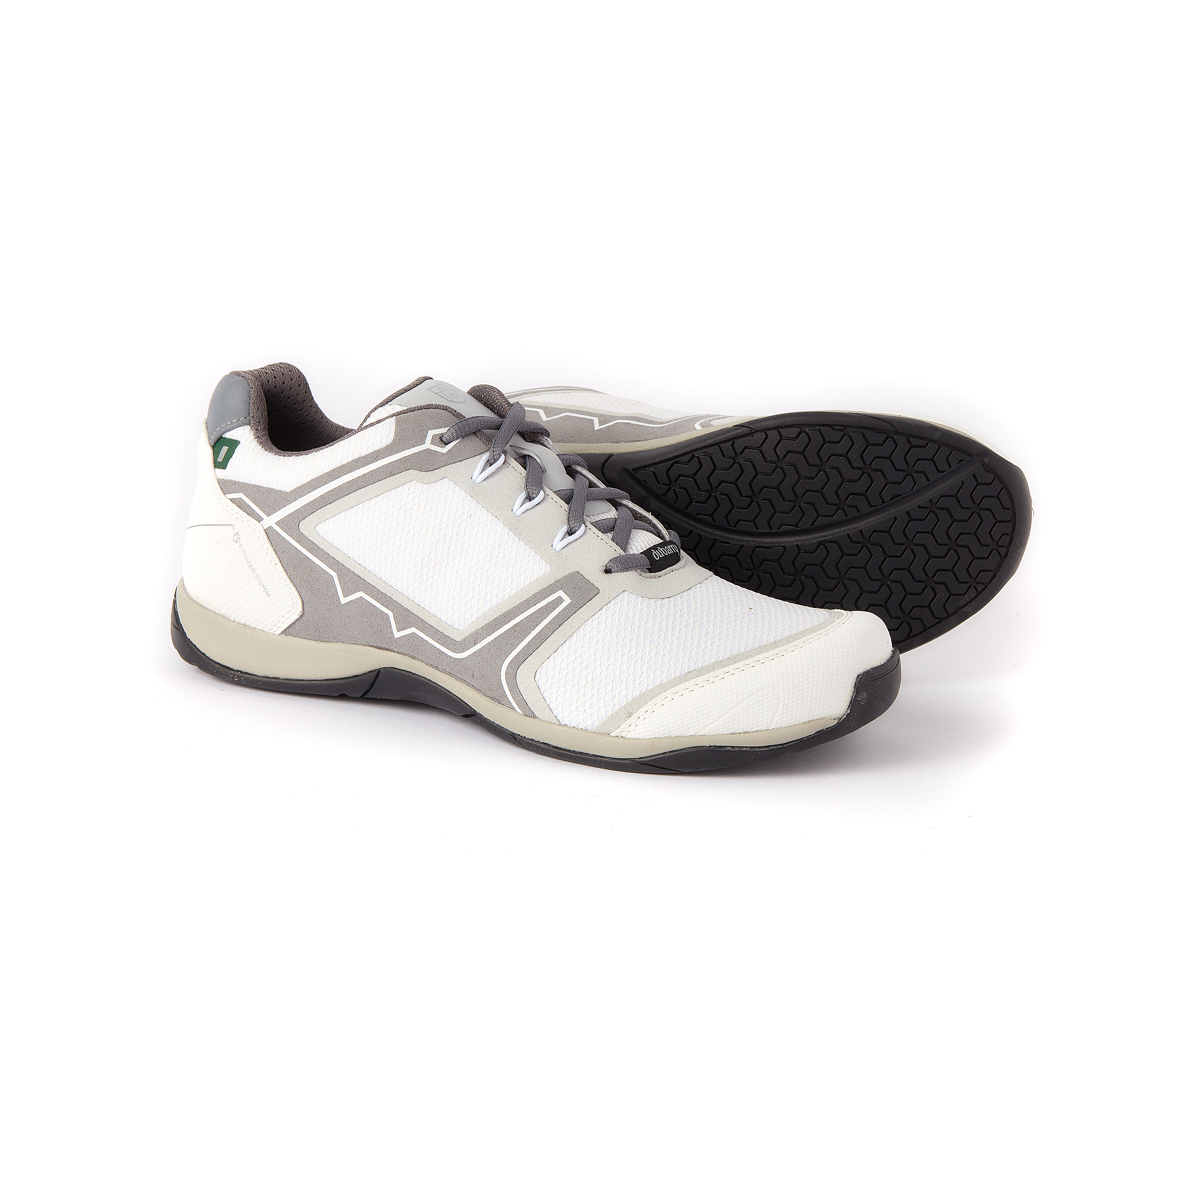 Dubarry Skerries chaussures de voile unisexe blanc, taille 42